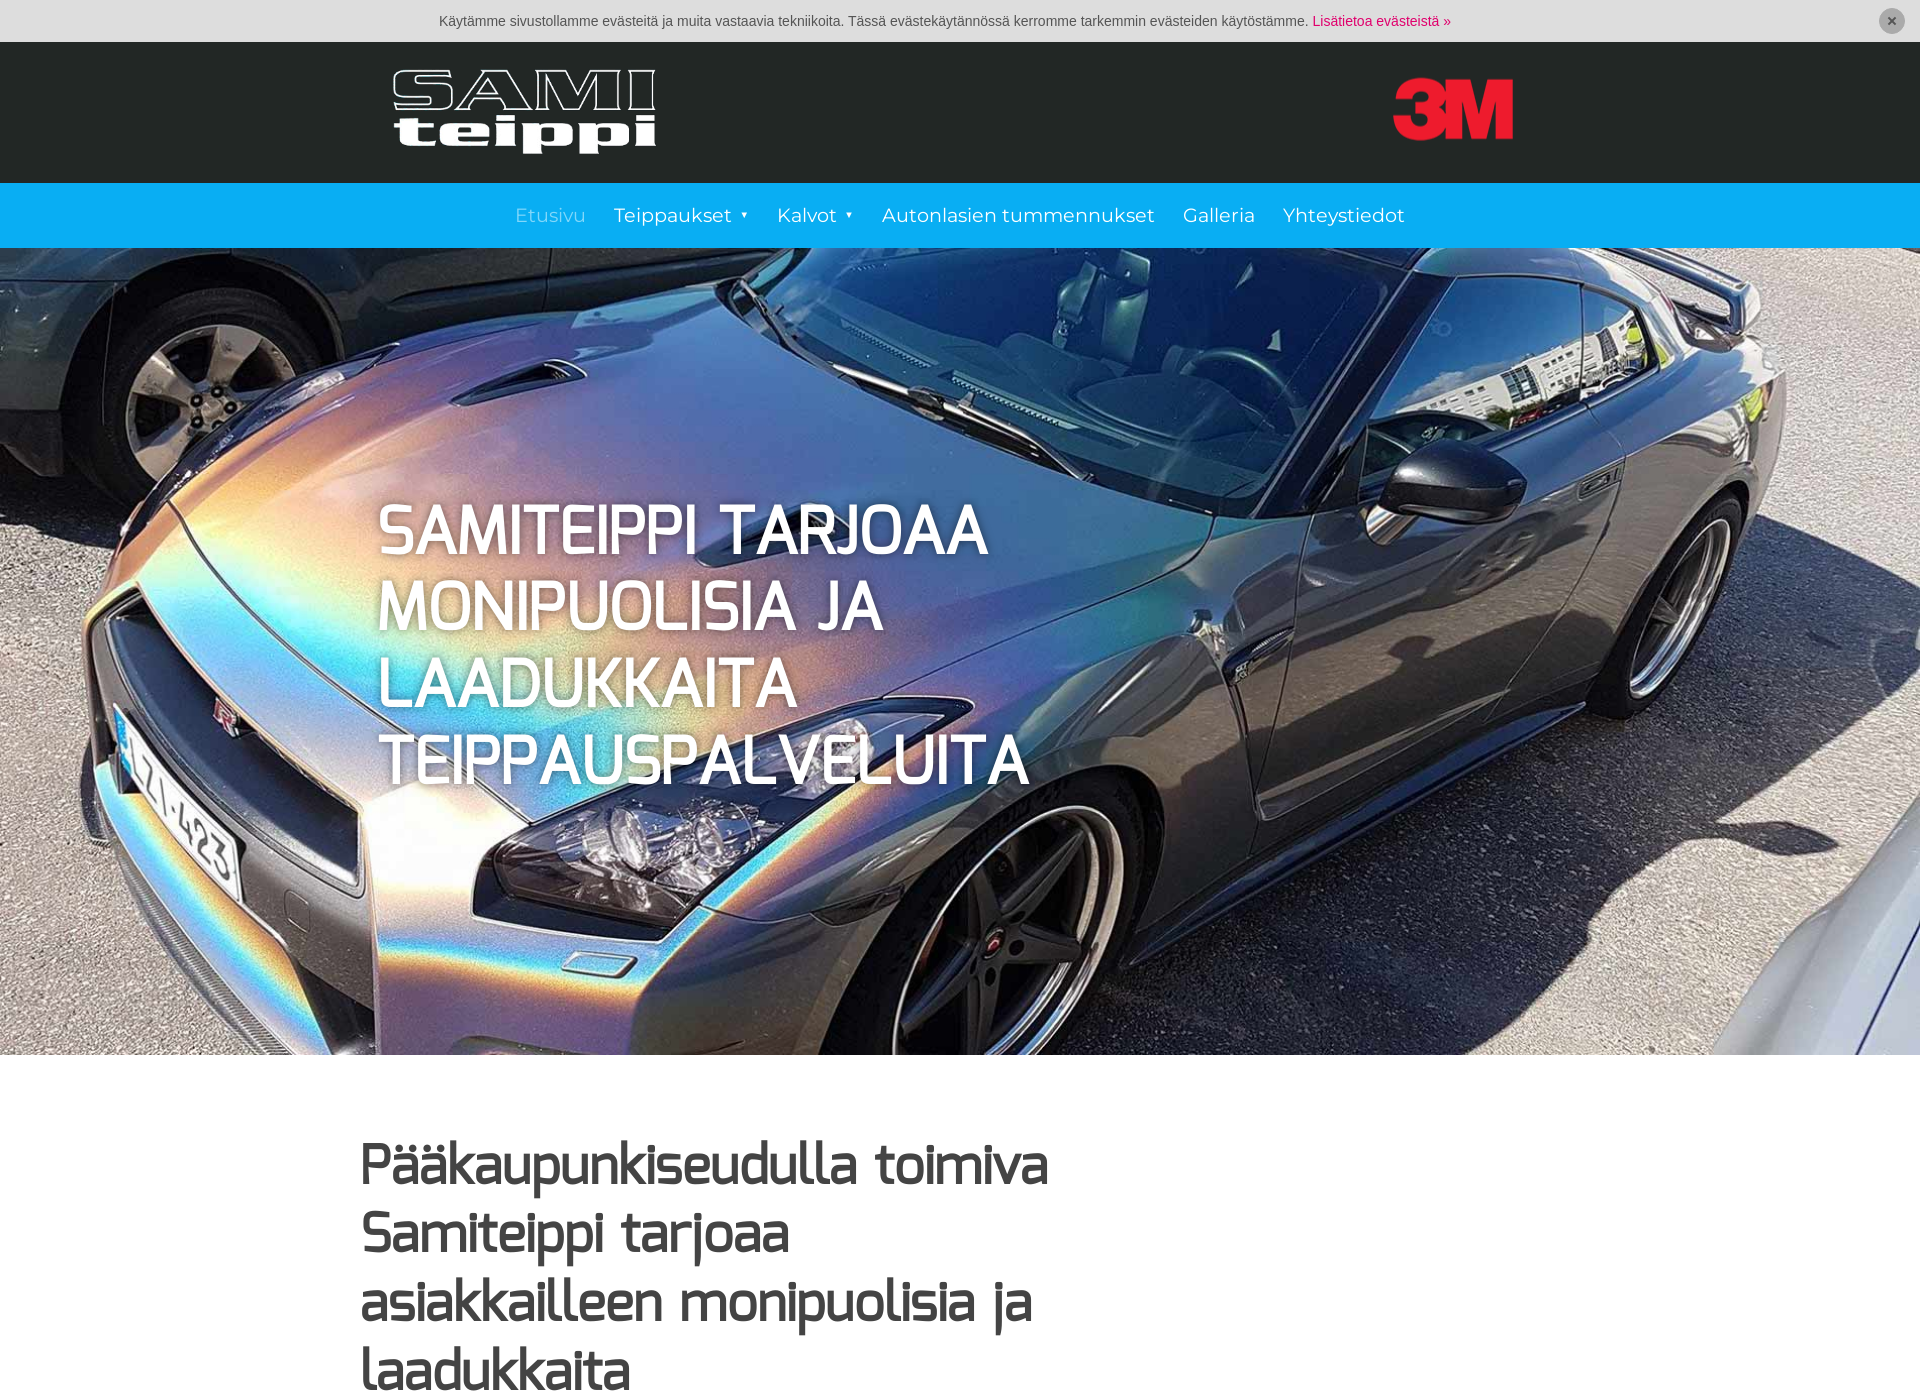 Skärmdump för autonyliteippaus.fi